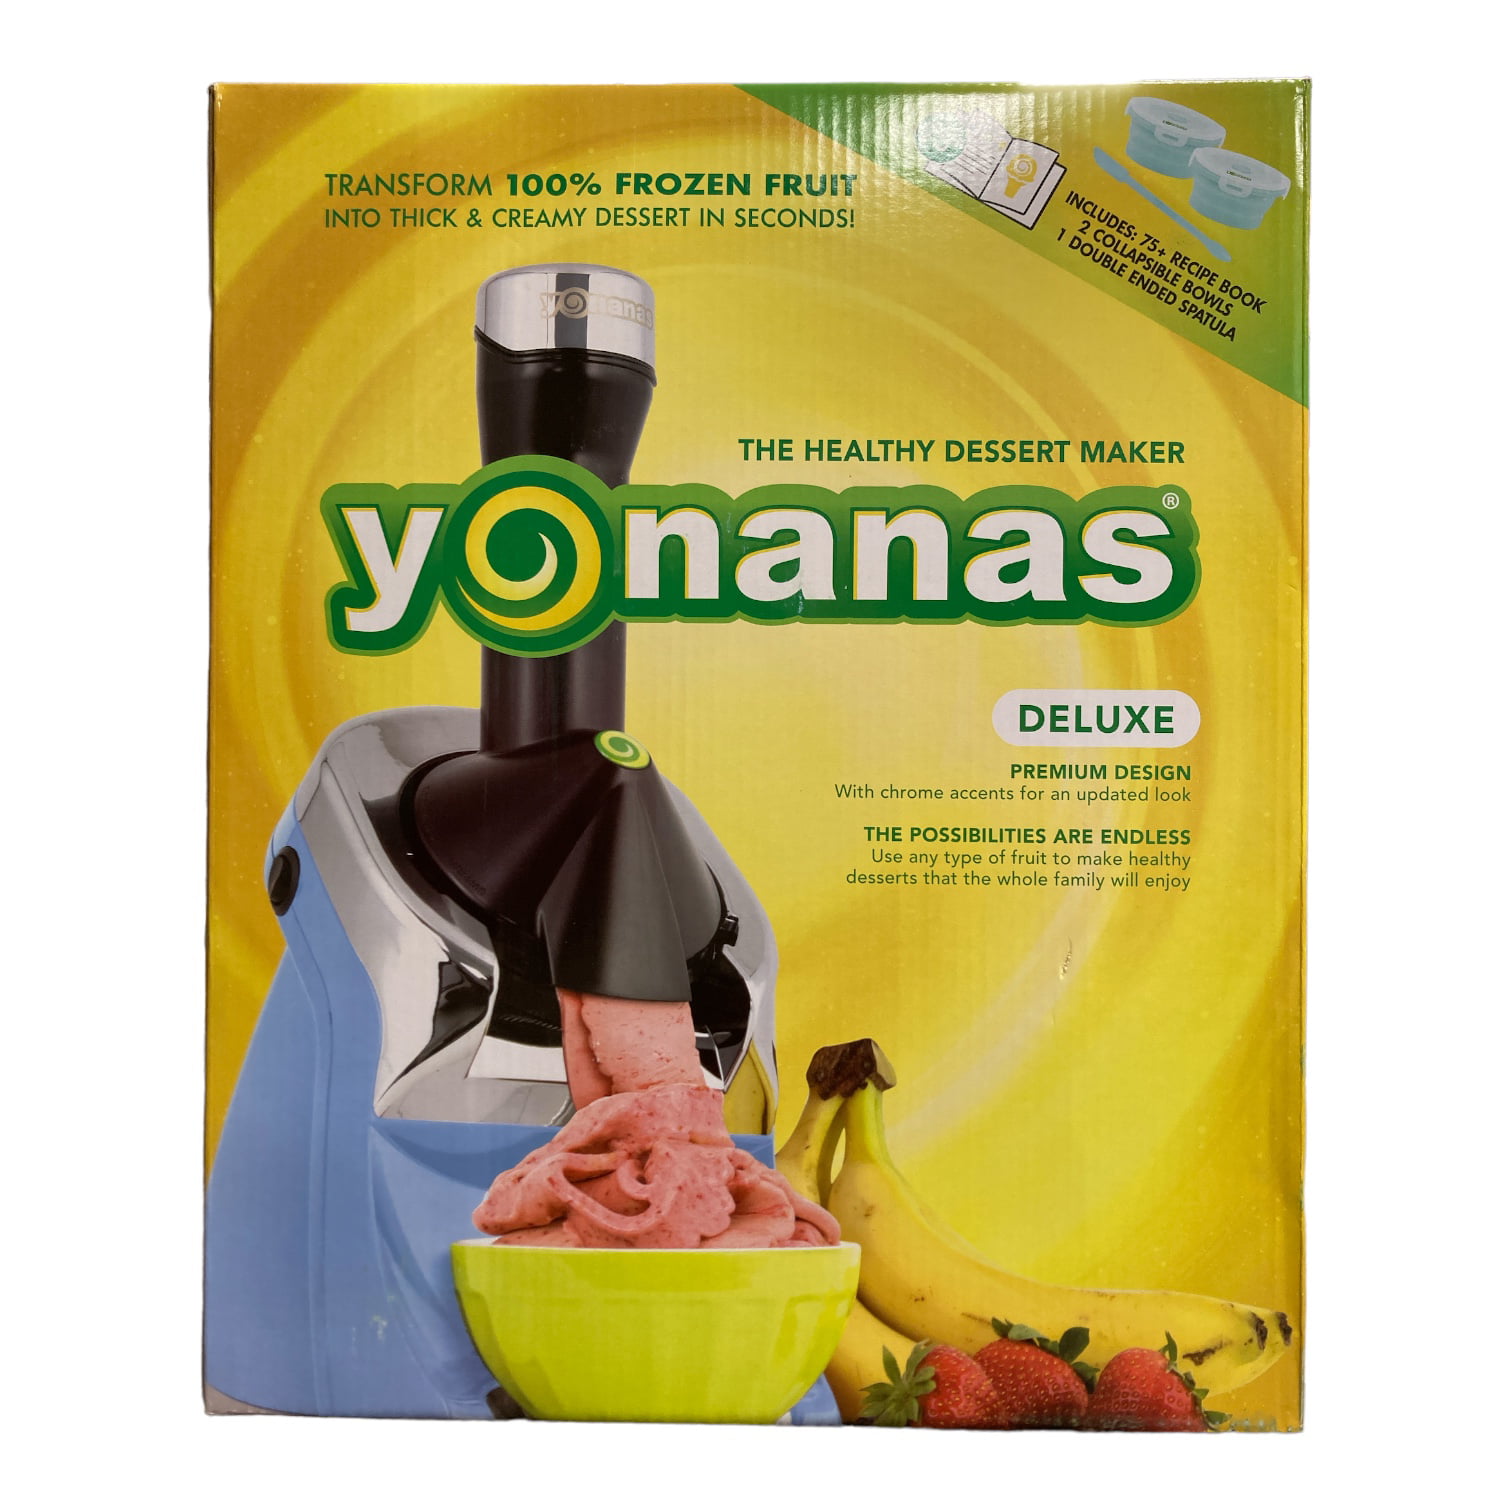 Dole Yonanas Ice Cream Treat Maker Frozen Yogurt Sorbet Machine NEW in Box